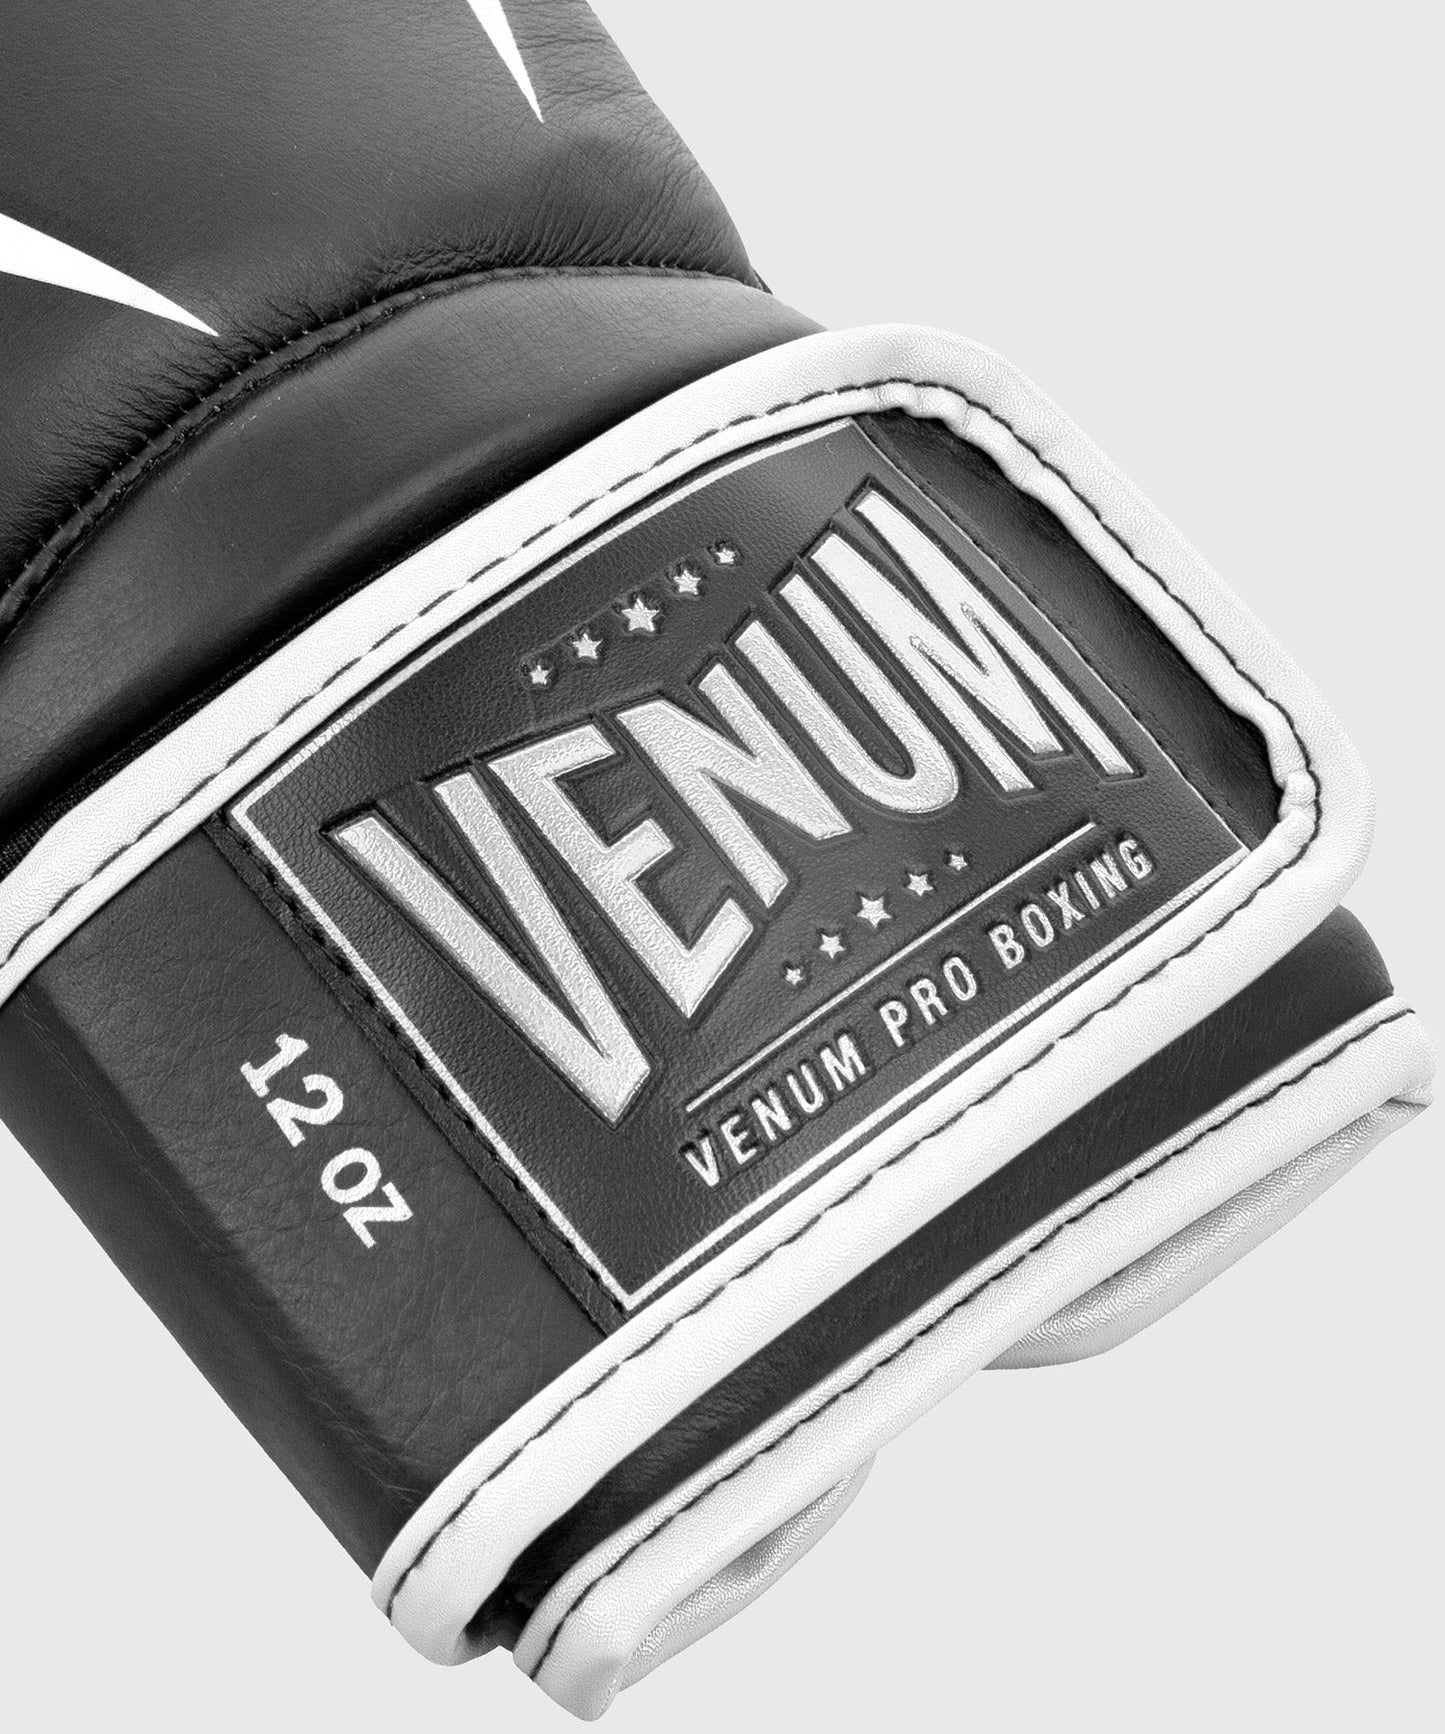 Venum Giant 2.0 professionelle Boxhandschuhe - Klettverschluss